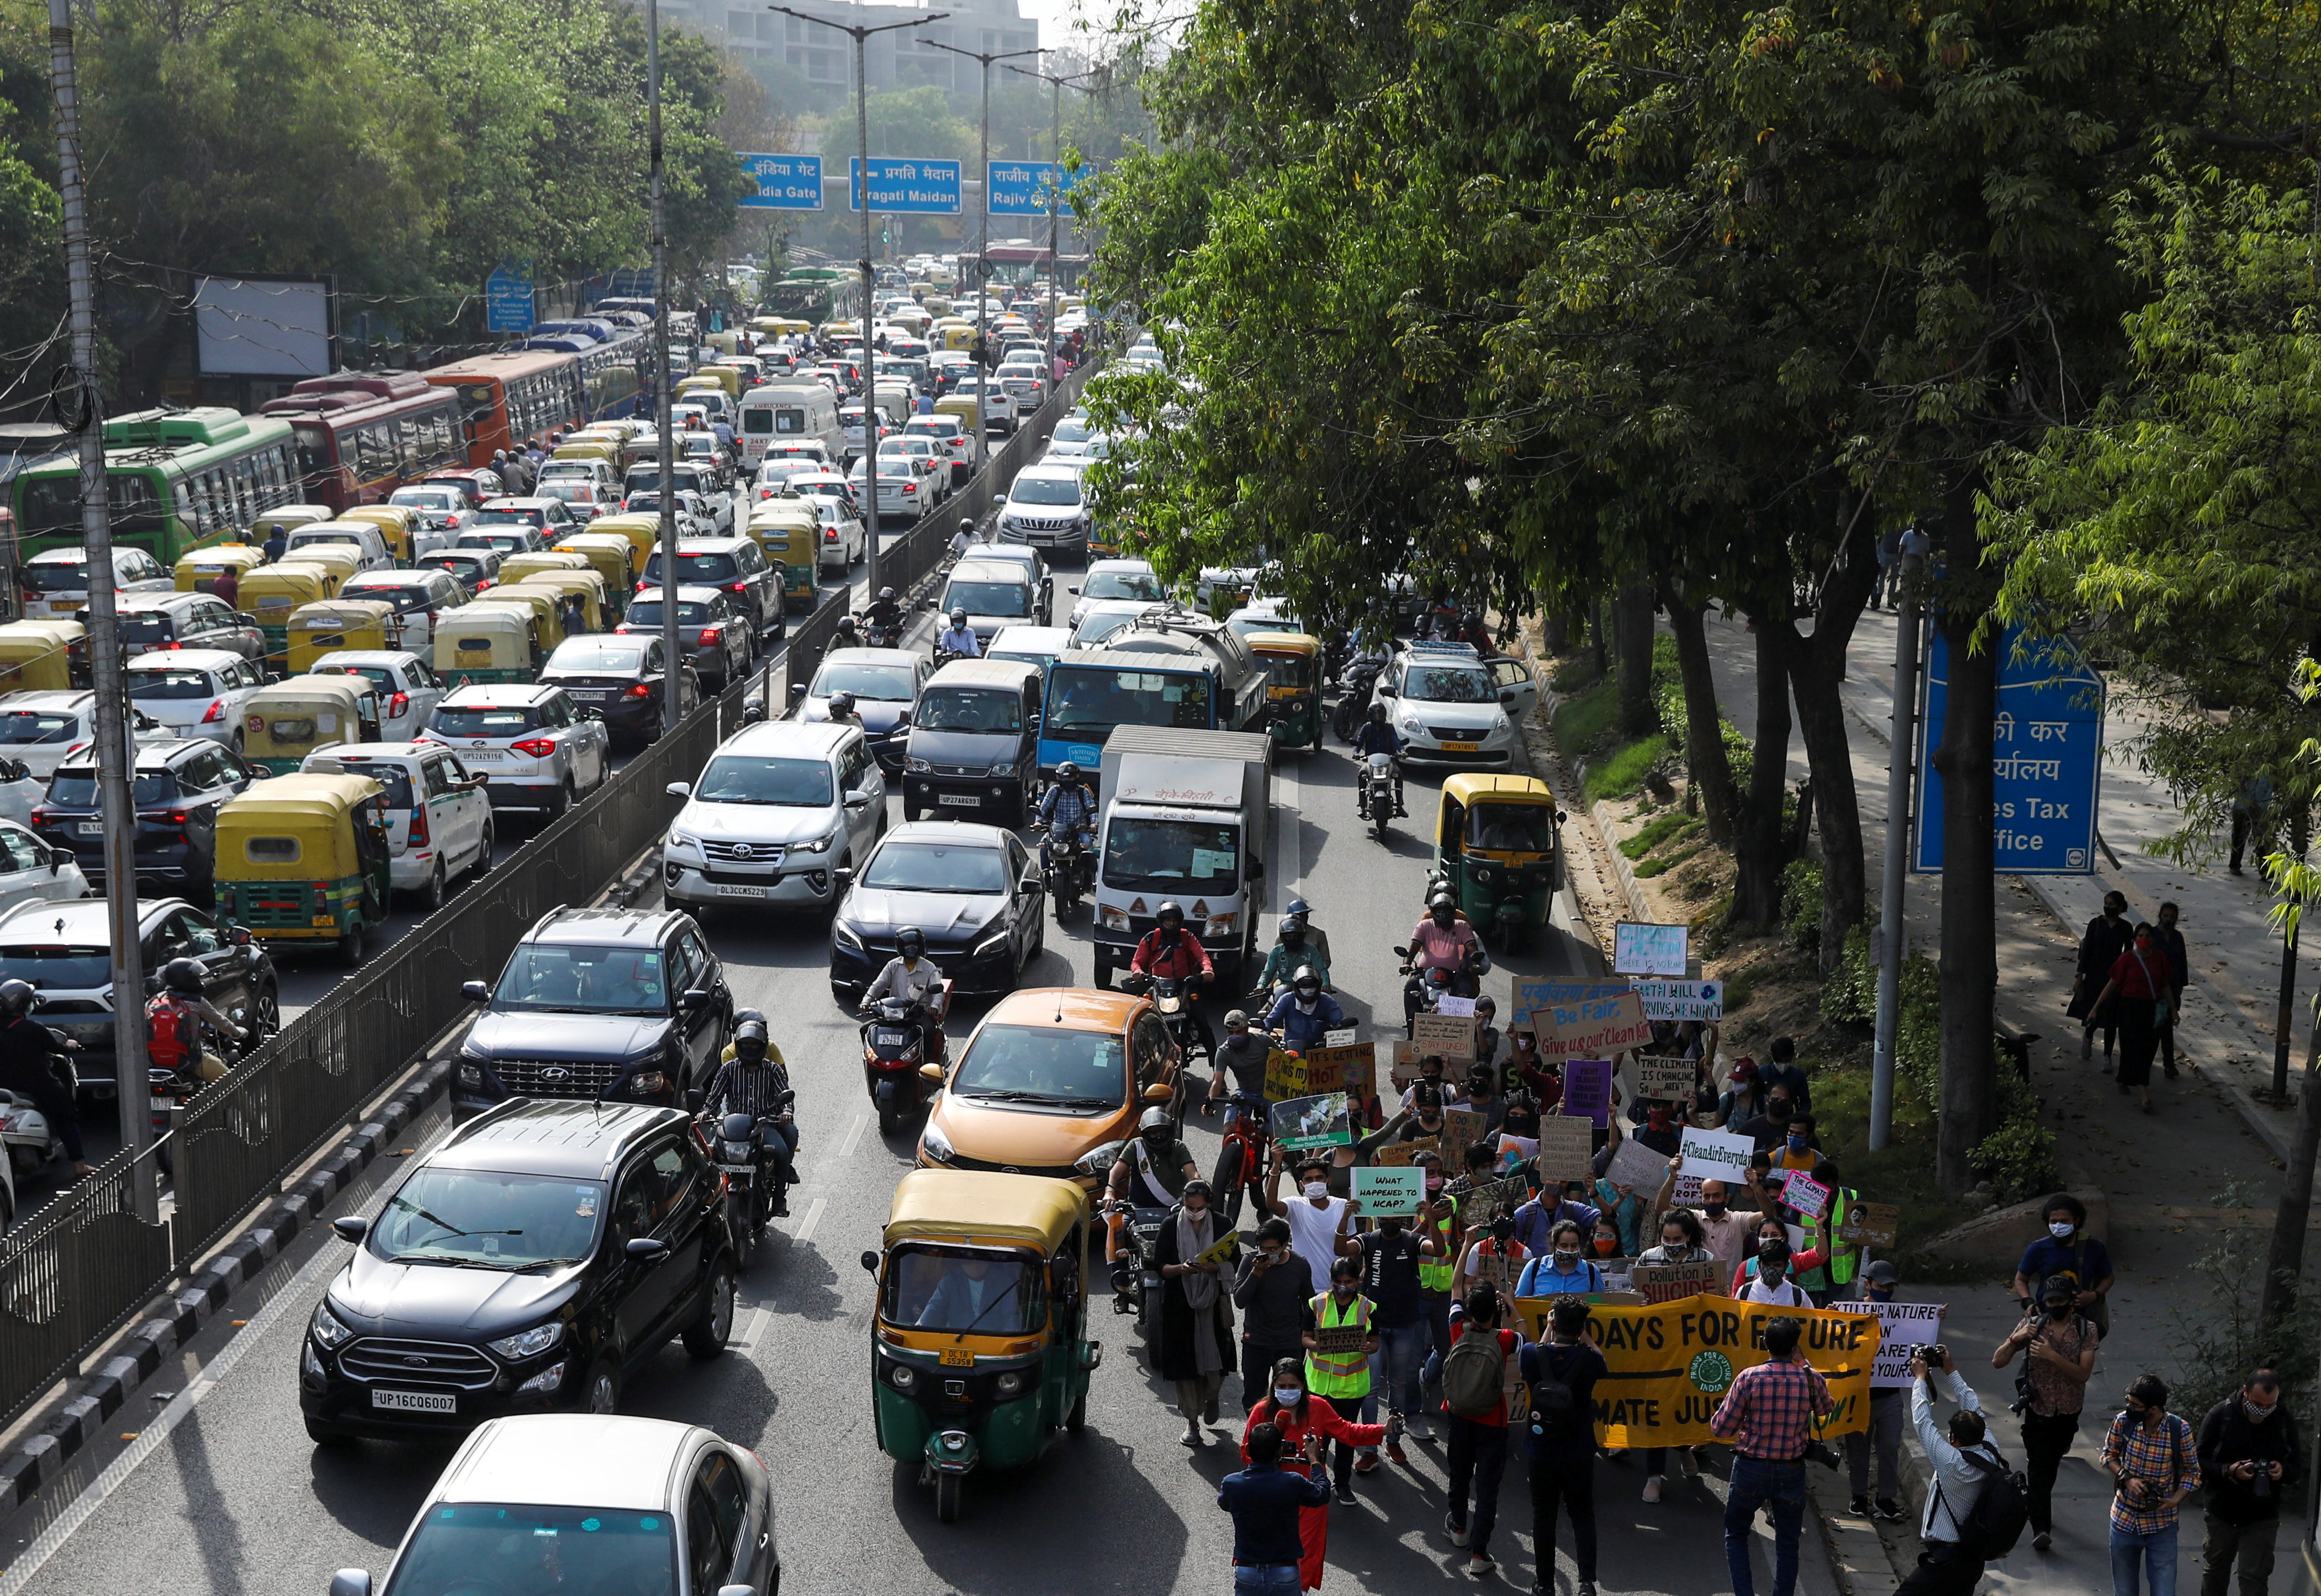 People take part in a 'Fridays for Future' march towards the Delhi Secretariat building, in New Delhi